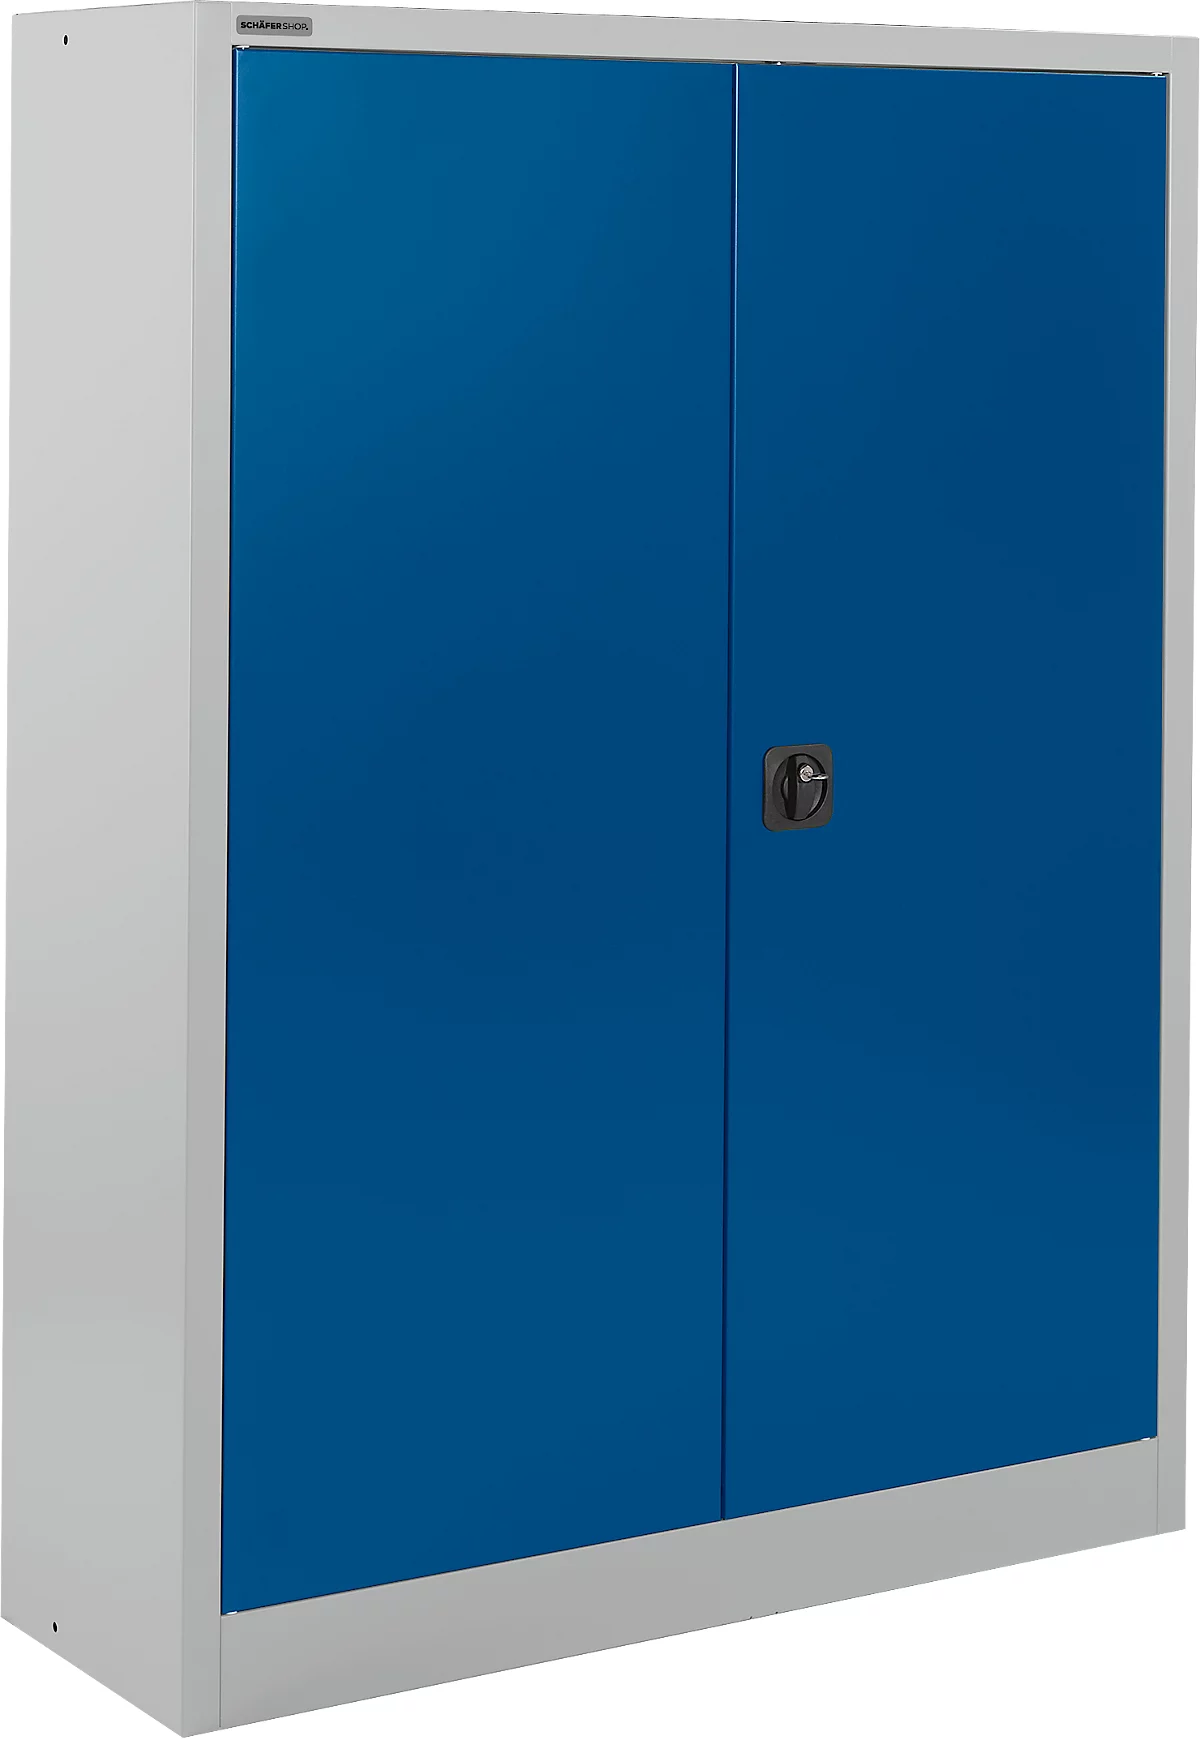 Schäfer Shop Select materiaalkast MSI 16412, B 1200 x D 400 x H 1535 mm, 3 etages, staal, alu wit RAL 9006/enzisch blauw RAL 5010